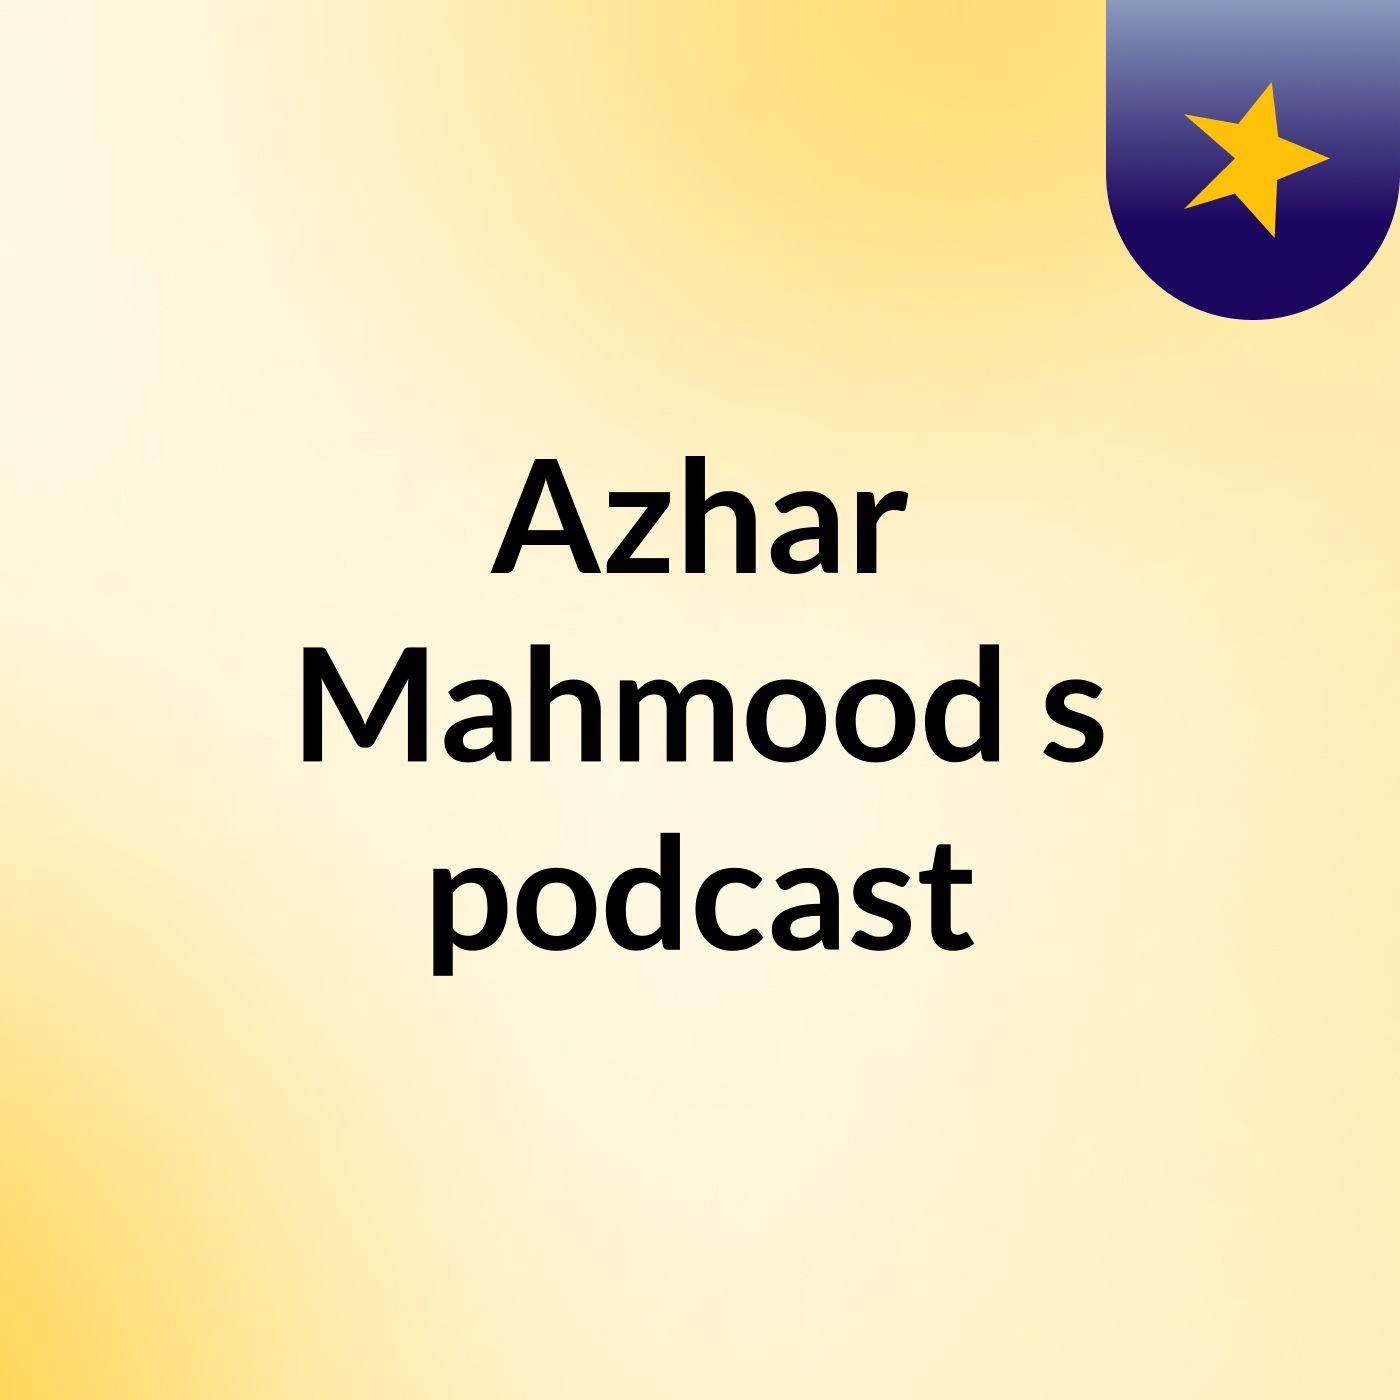 Episode 4 - Azhar Mahmood's podcast